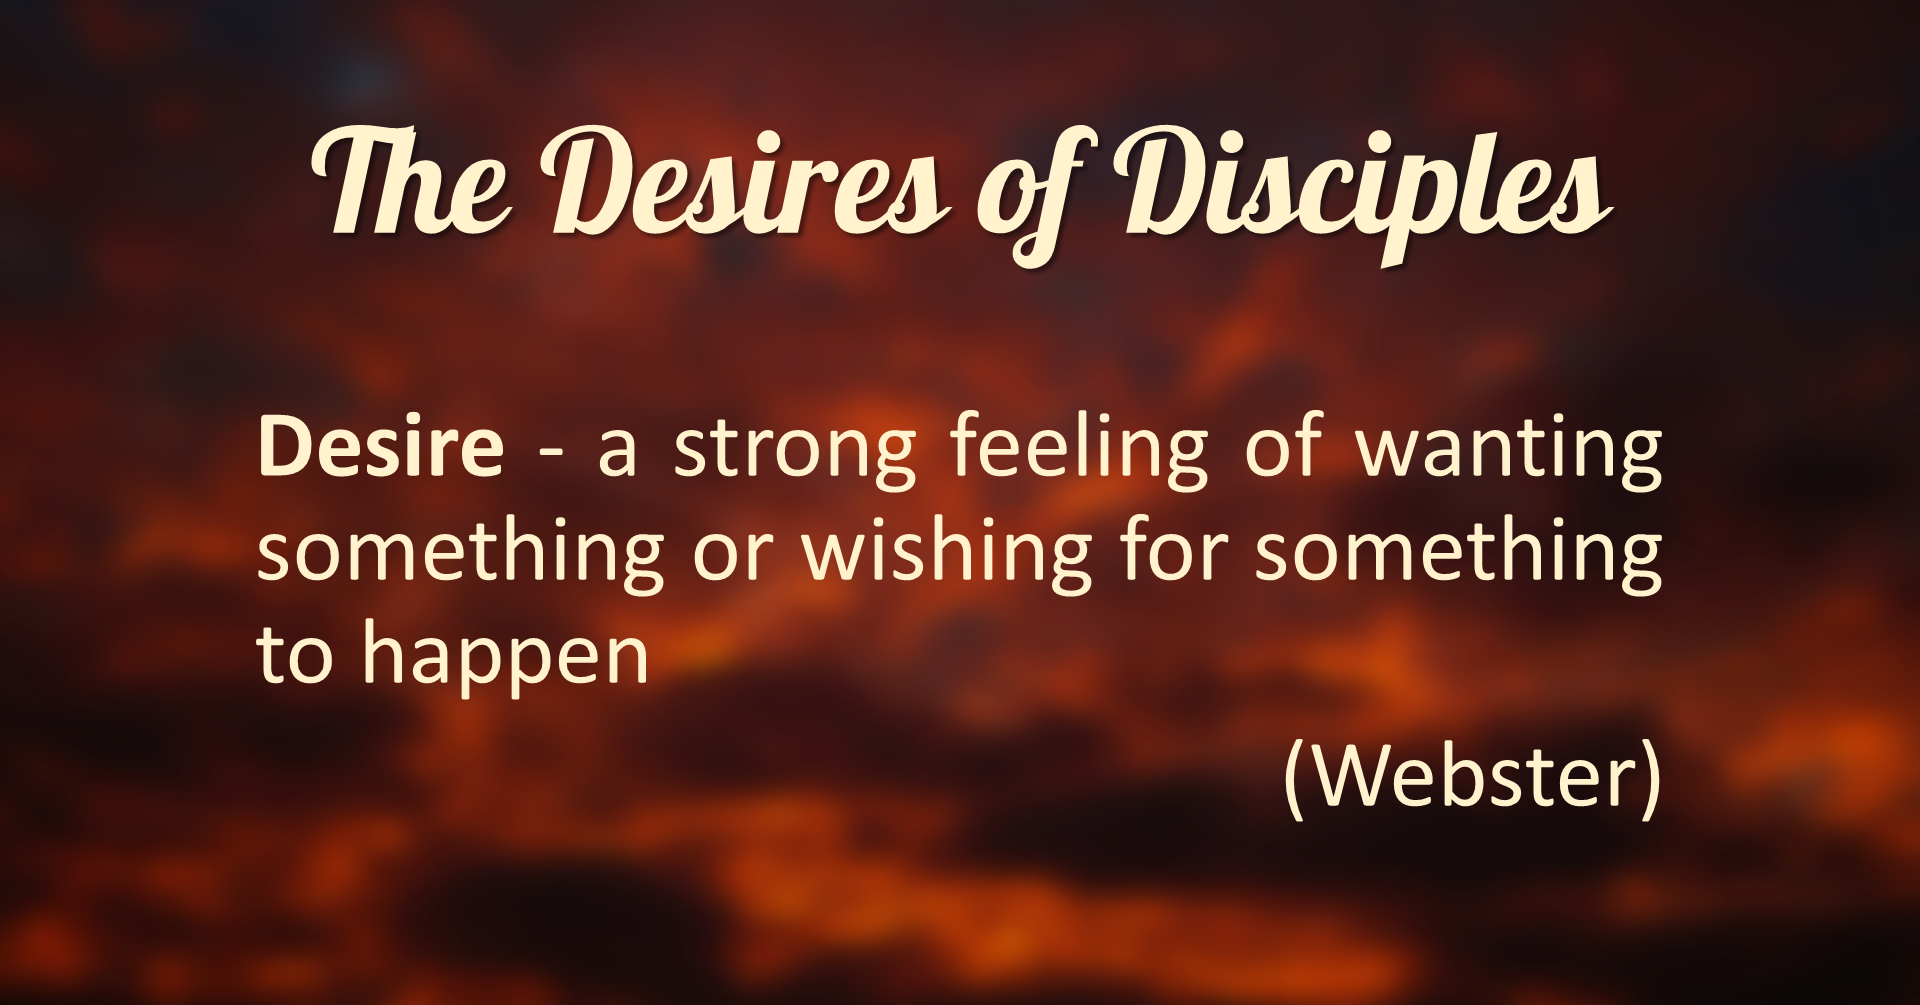 Of desire desciples Disciples Of